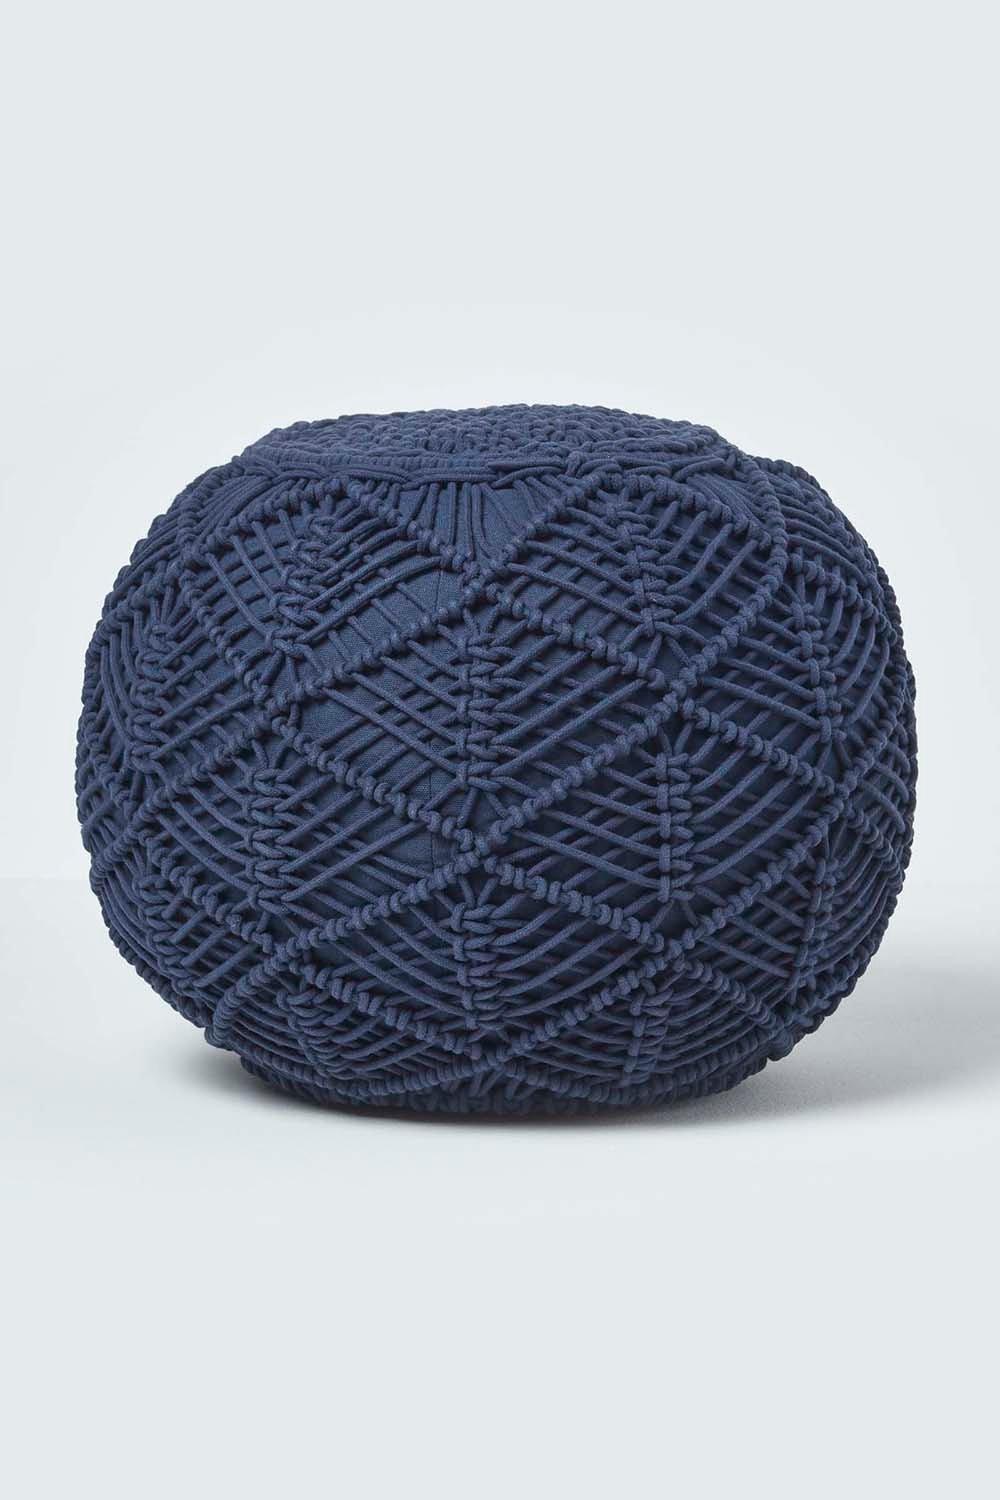 Macrame Knitted Pouffe 40 x 50 cm